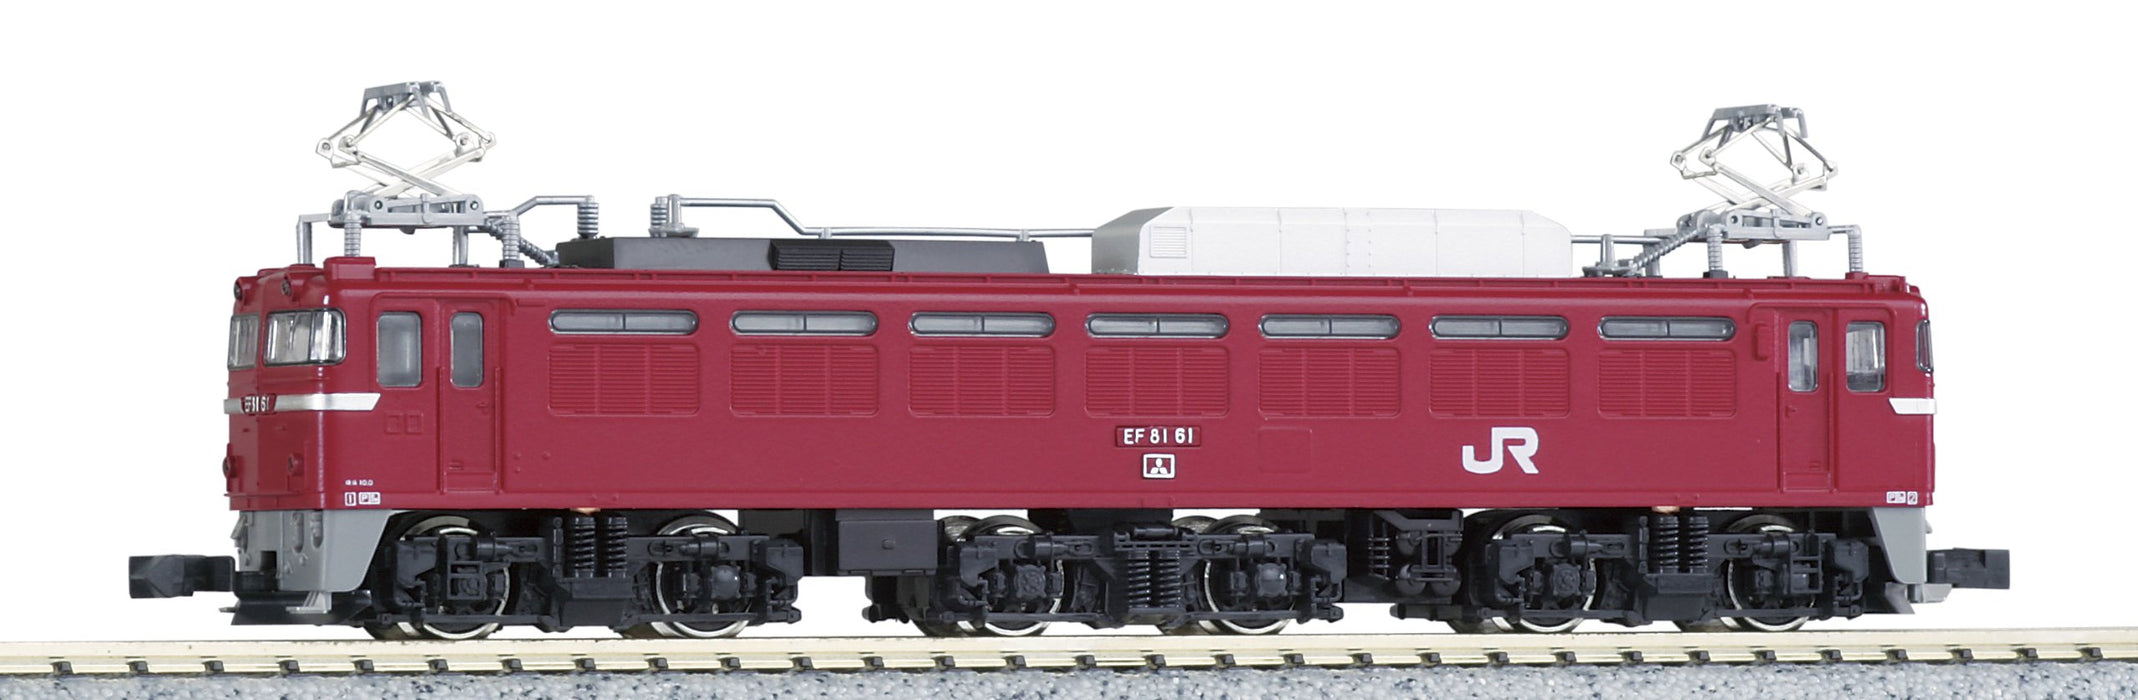 Kato Spur N 3021-6 Ef81 Modelleisenbahn - Jr East Japan Farbedition